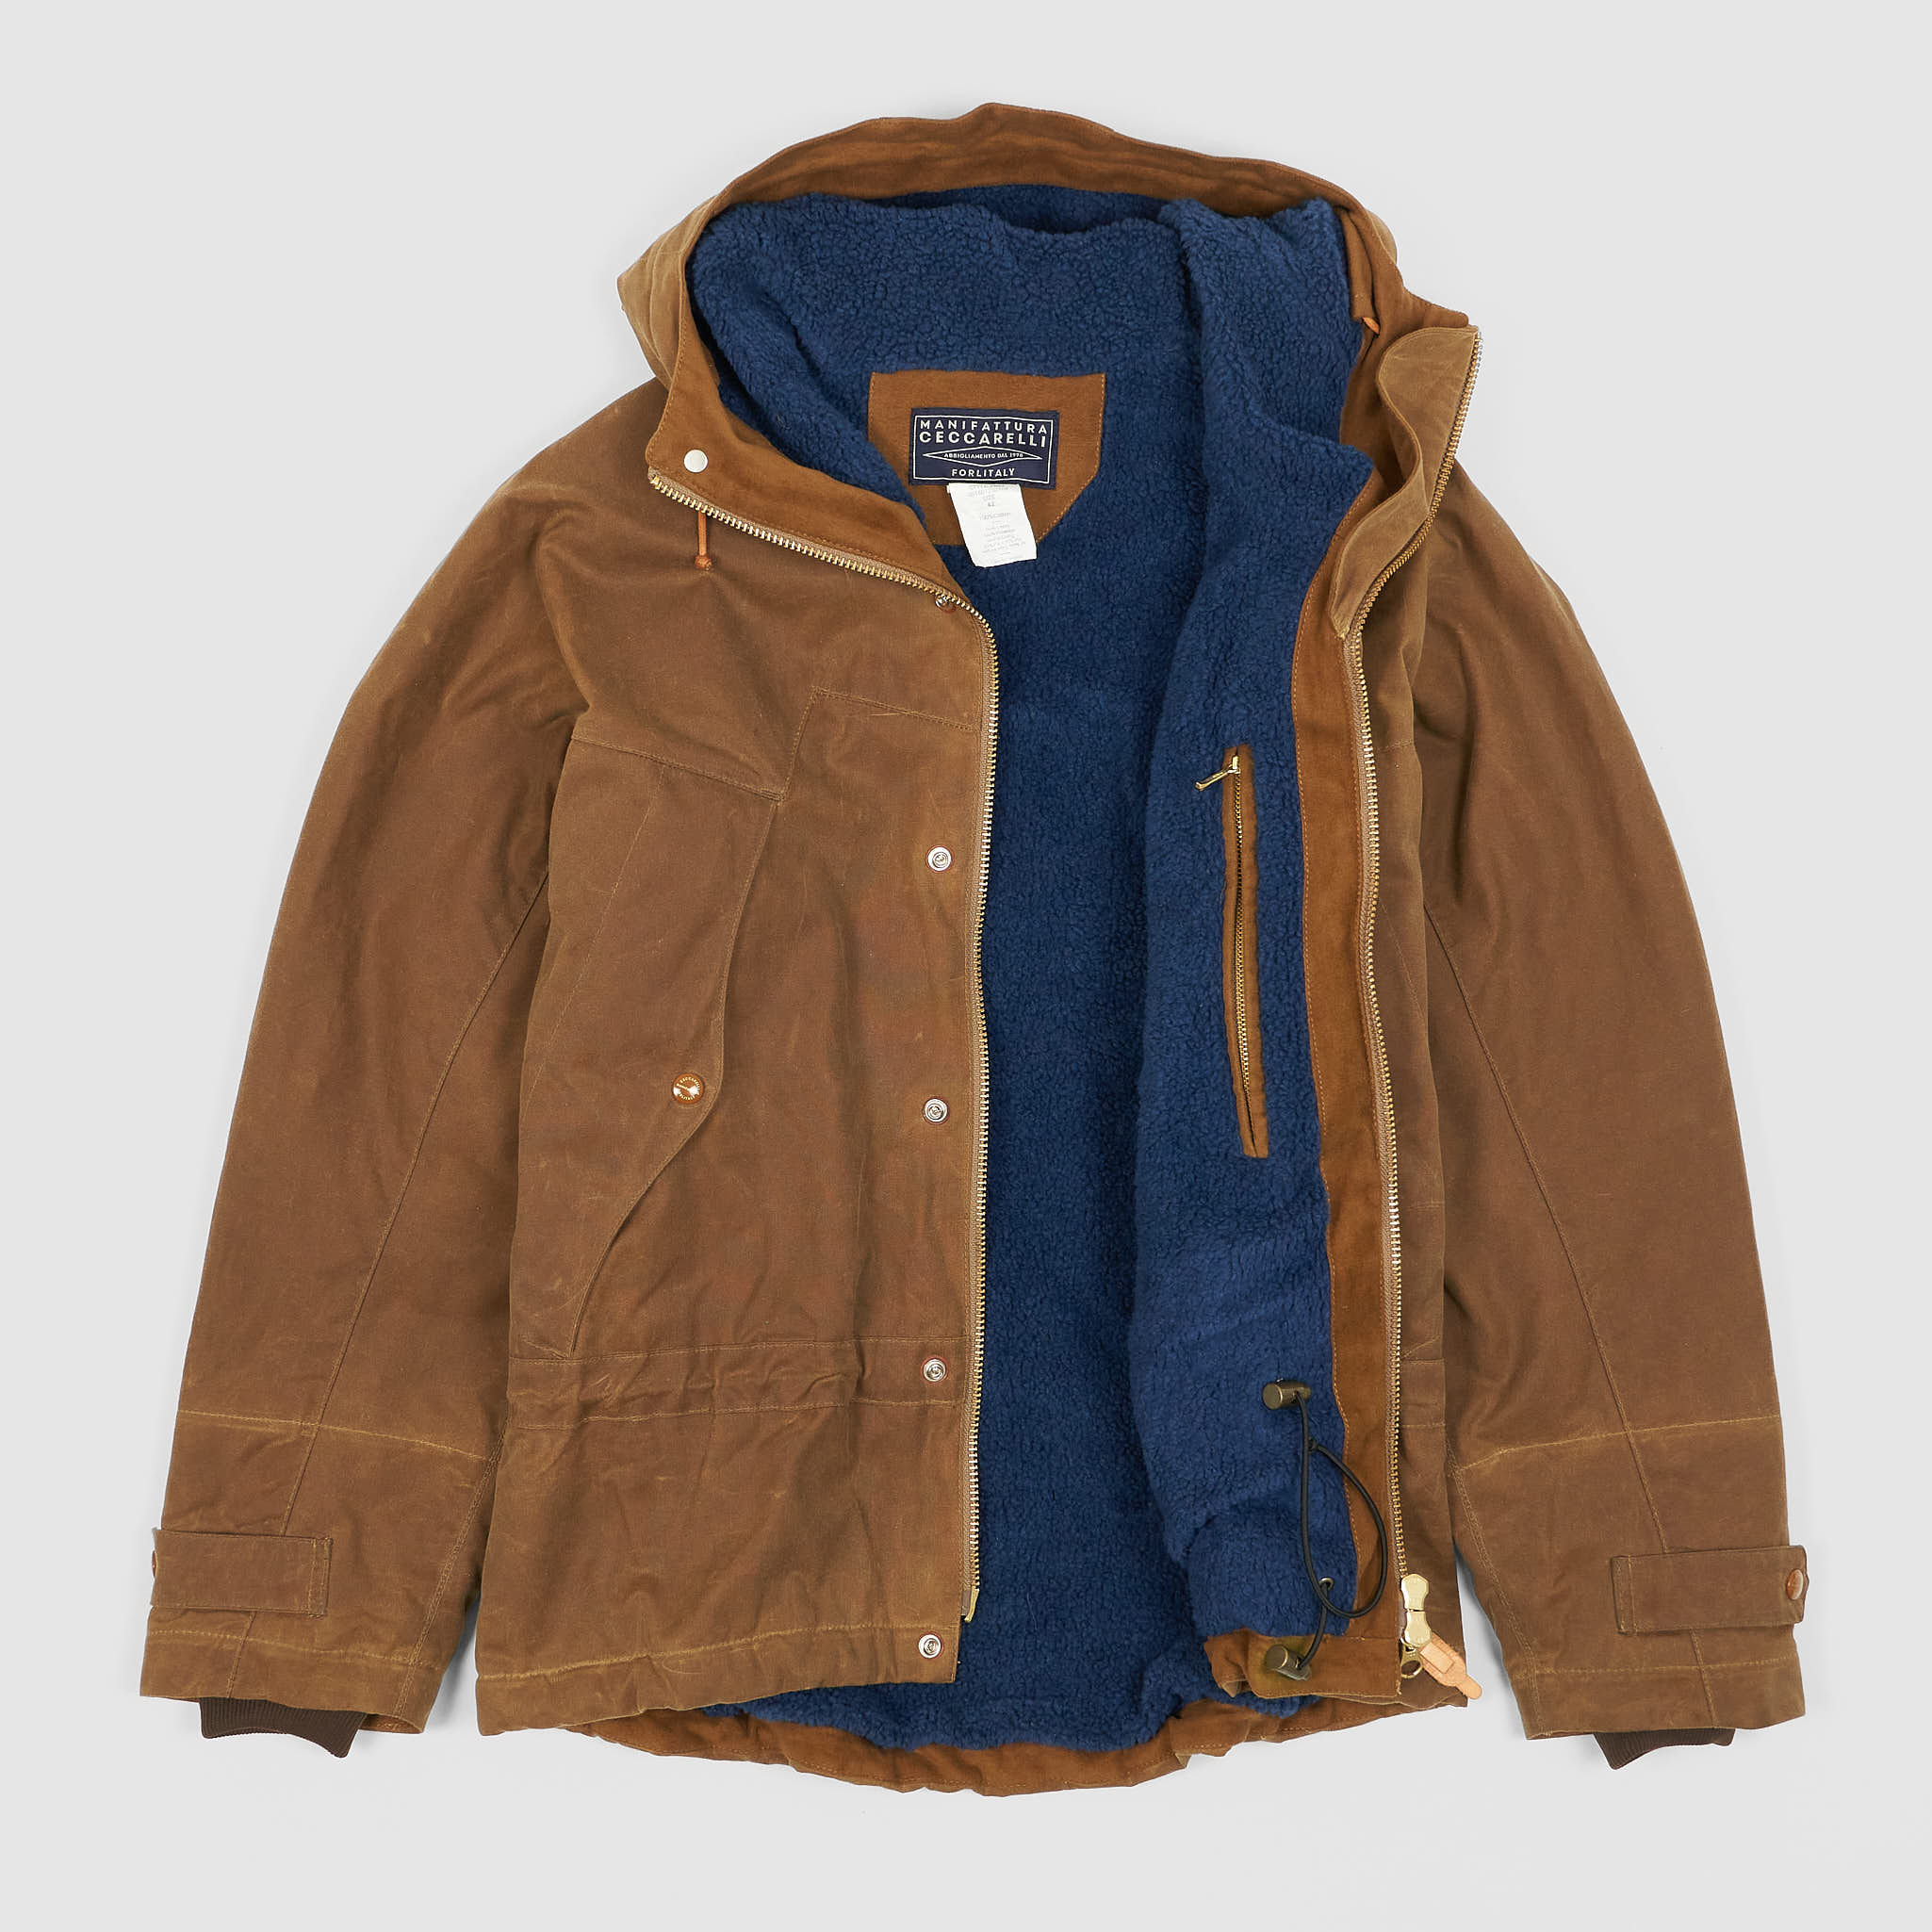 Filson Mountain Outdoor Waxed Cotton Jacket - DeeCee style